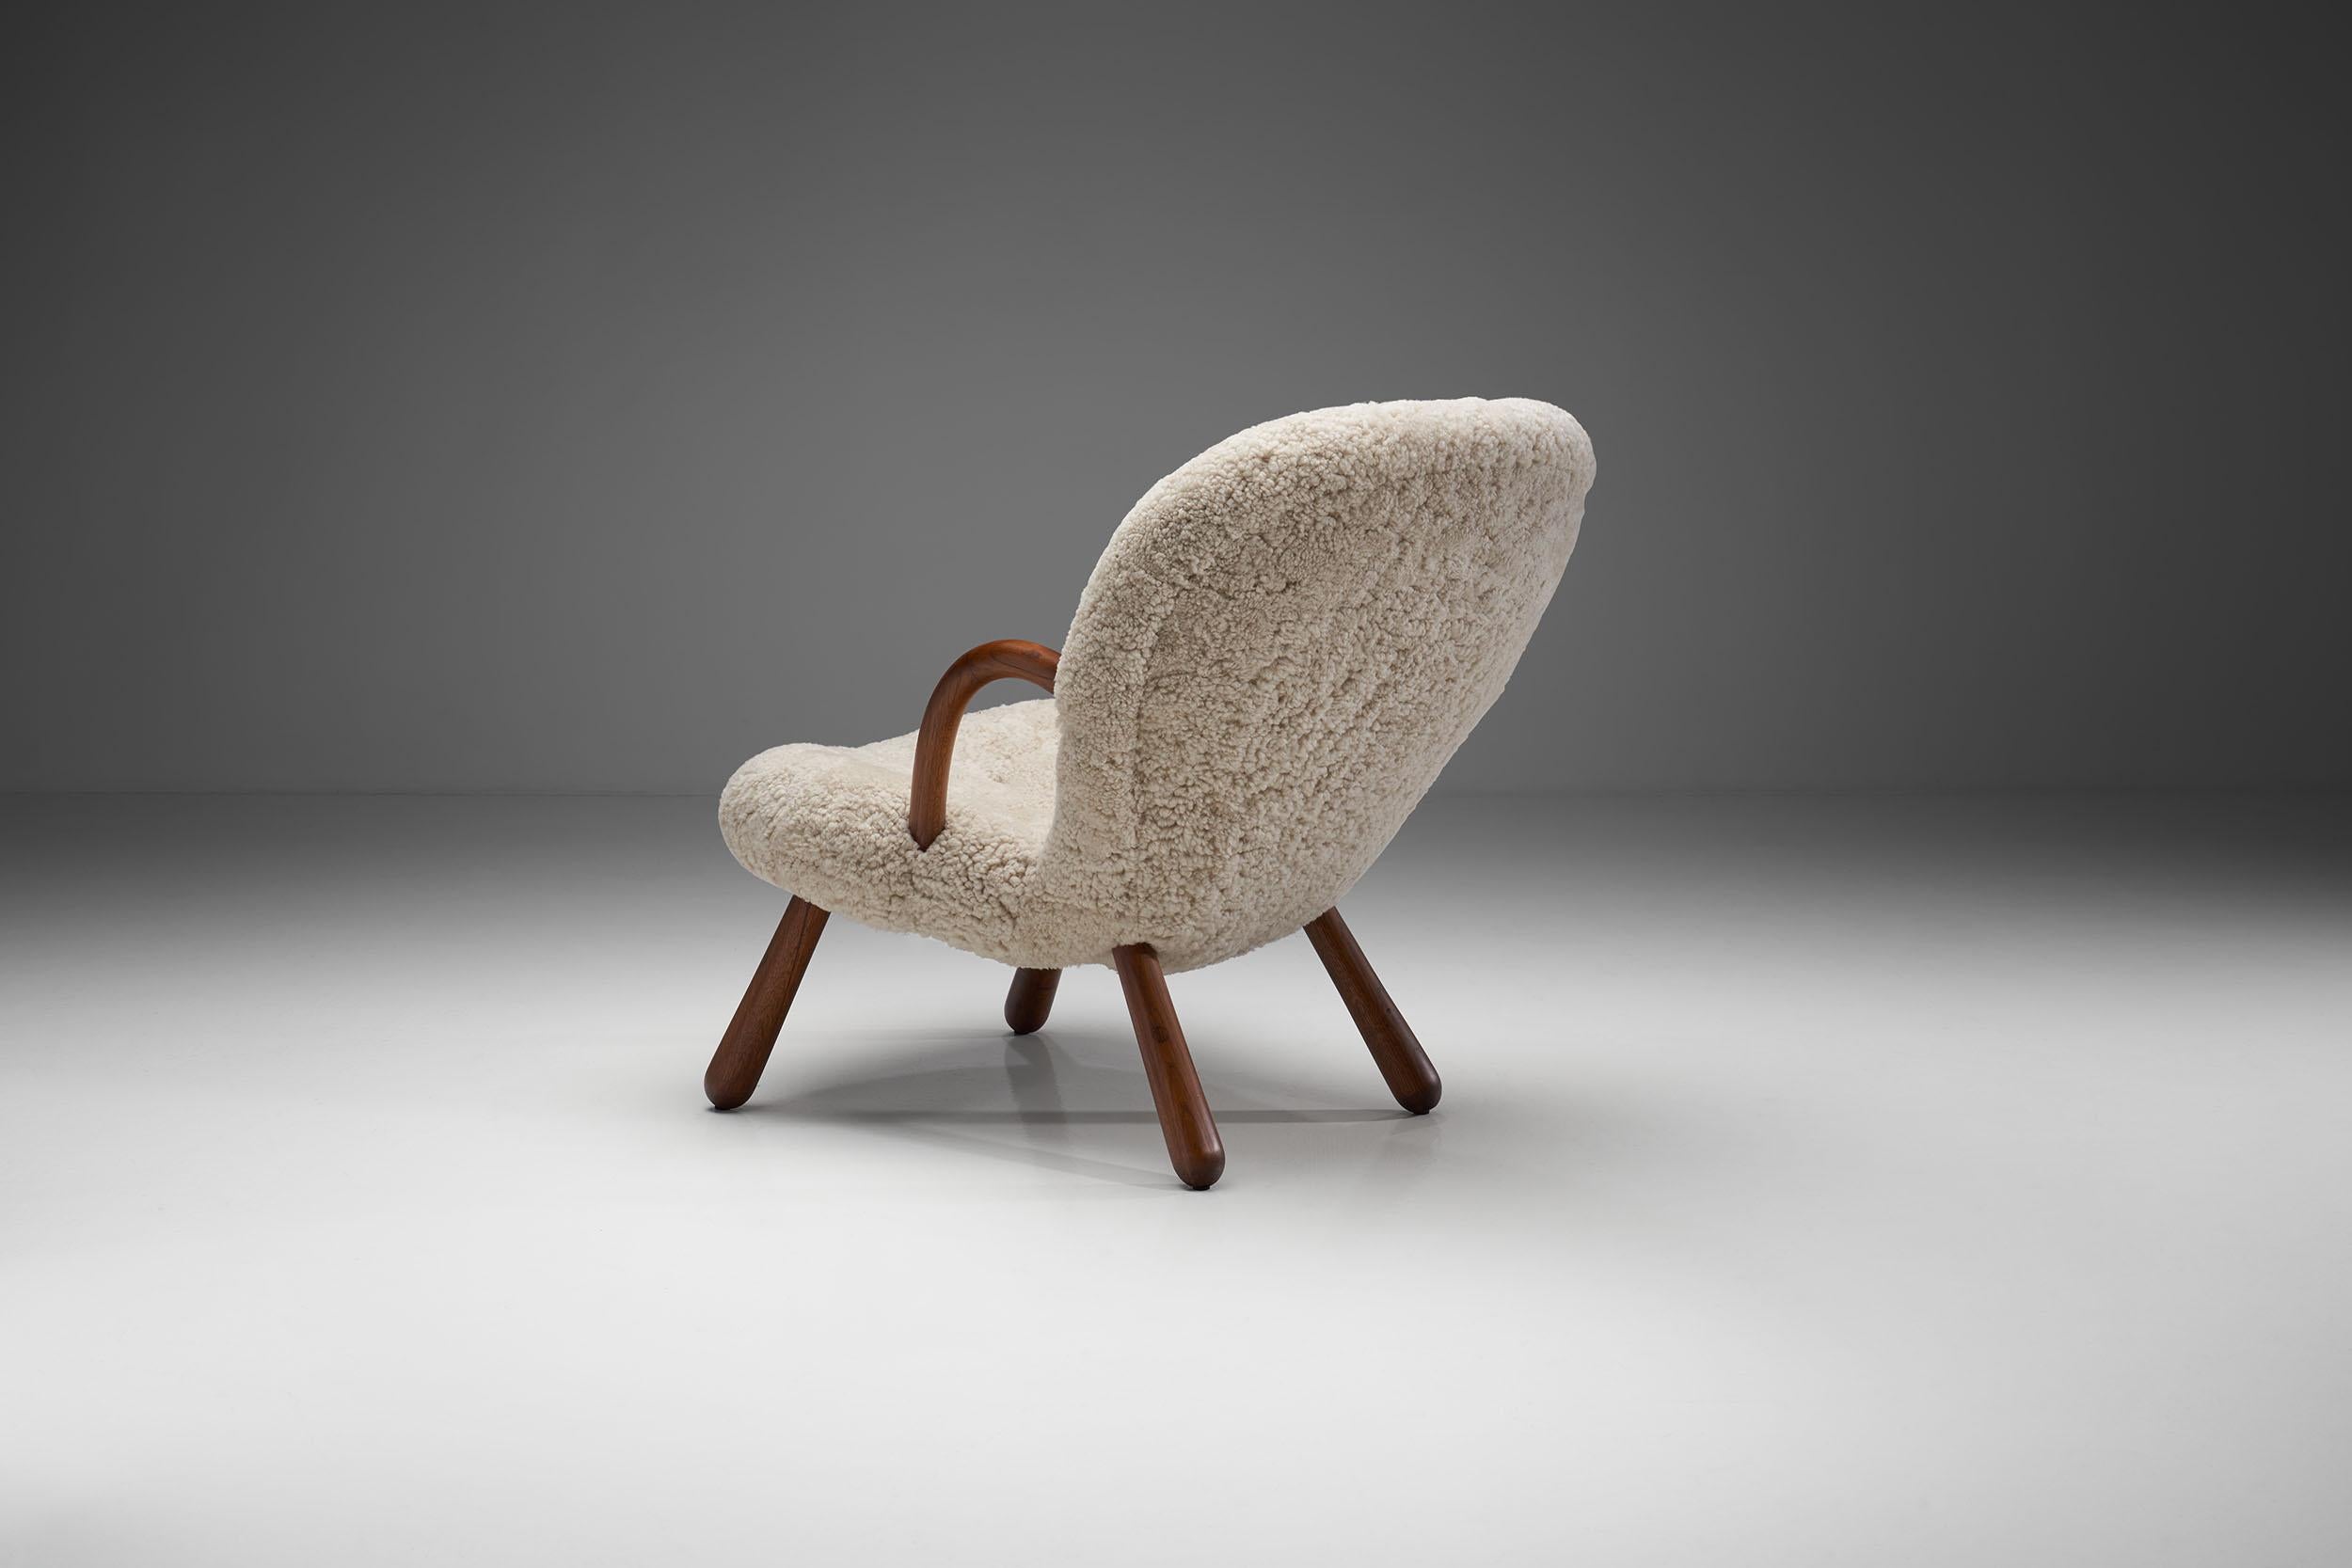 Scandinavian Modern “Clam” Chair by Arnold Madsen for Madsen & Schubell, Denmark, 1944 For Sale